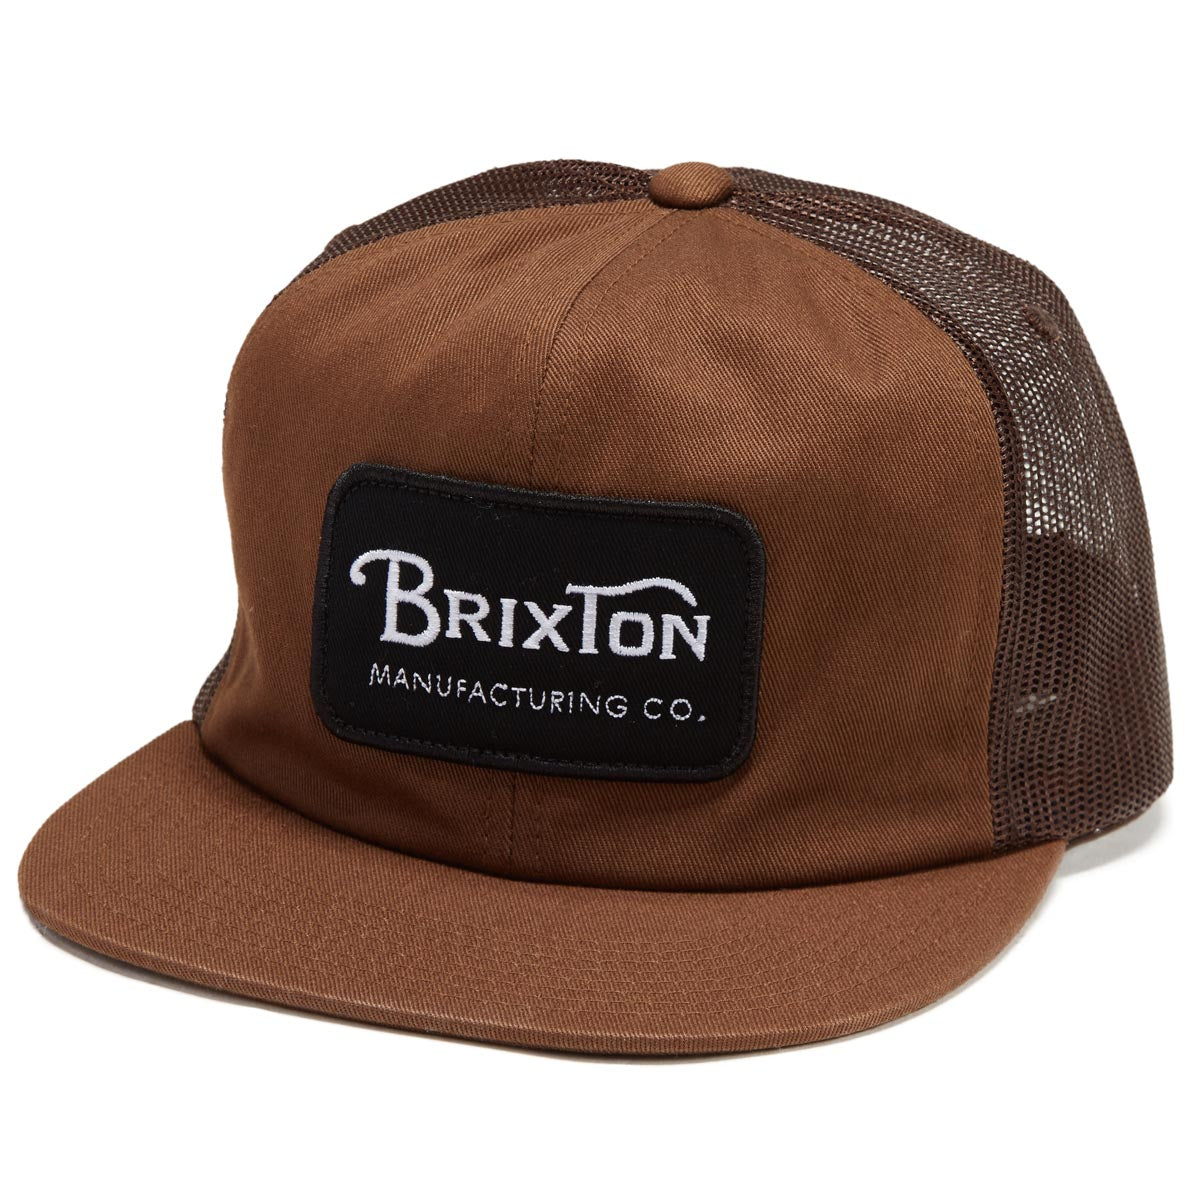 Brixton Grade Hp Trucker Hat - Brown/Brown image 1